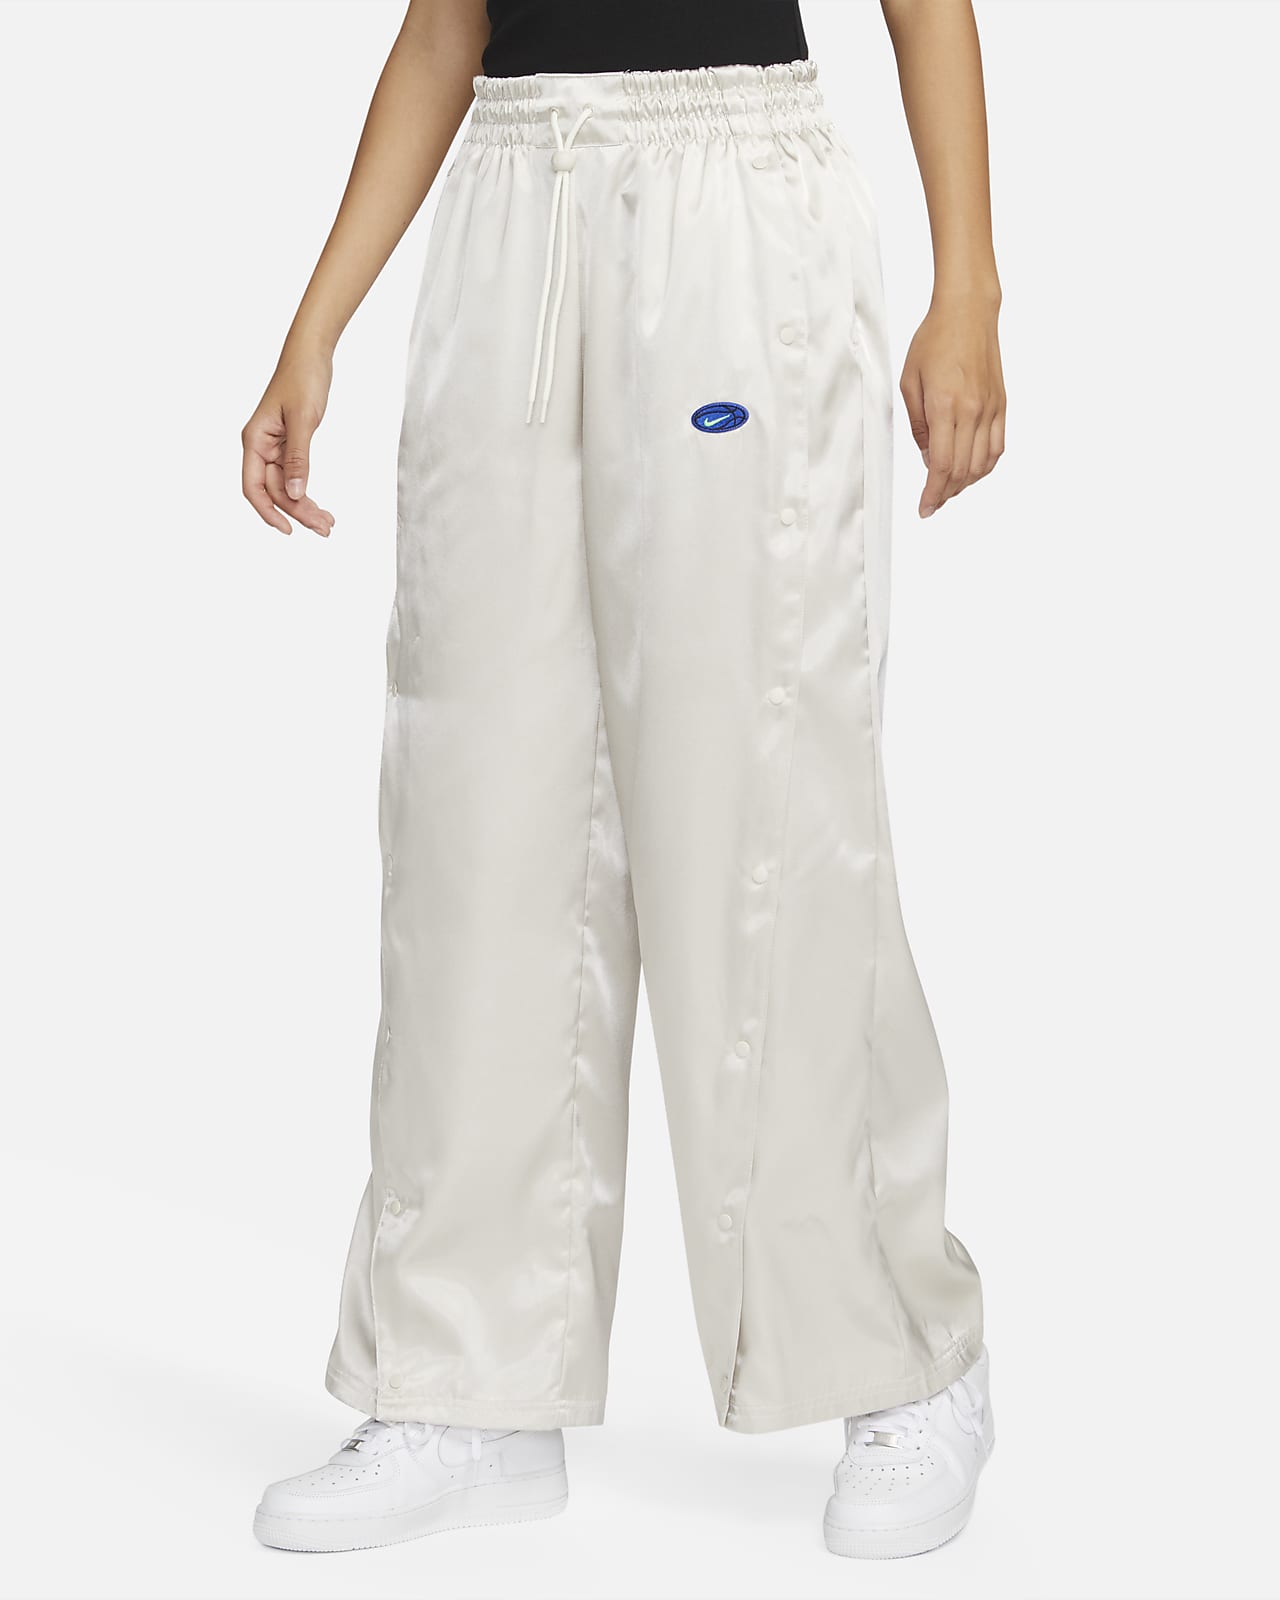 Nike Womens Loose Fit Synthetic Track Pants AR2812010Black  WhiteSmallBlack WhiteS  Amazonin Clothing  Accessories